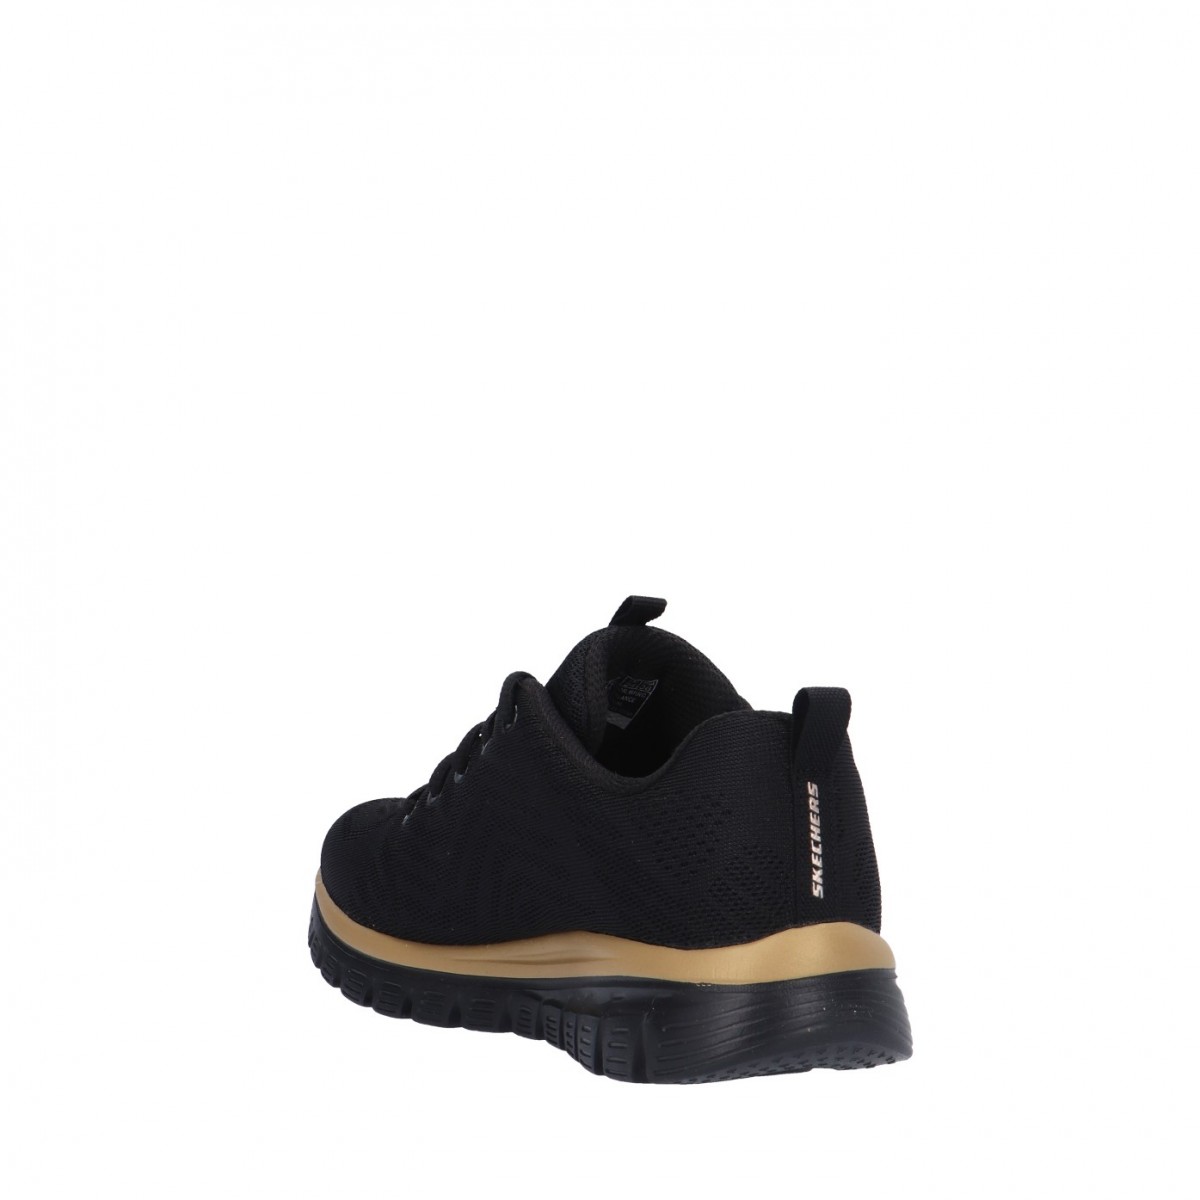 Skechers Sneaker Nero/rose gold Gomma 12615